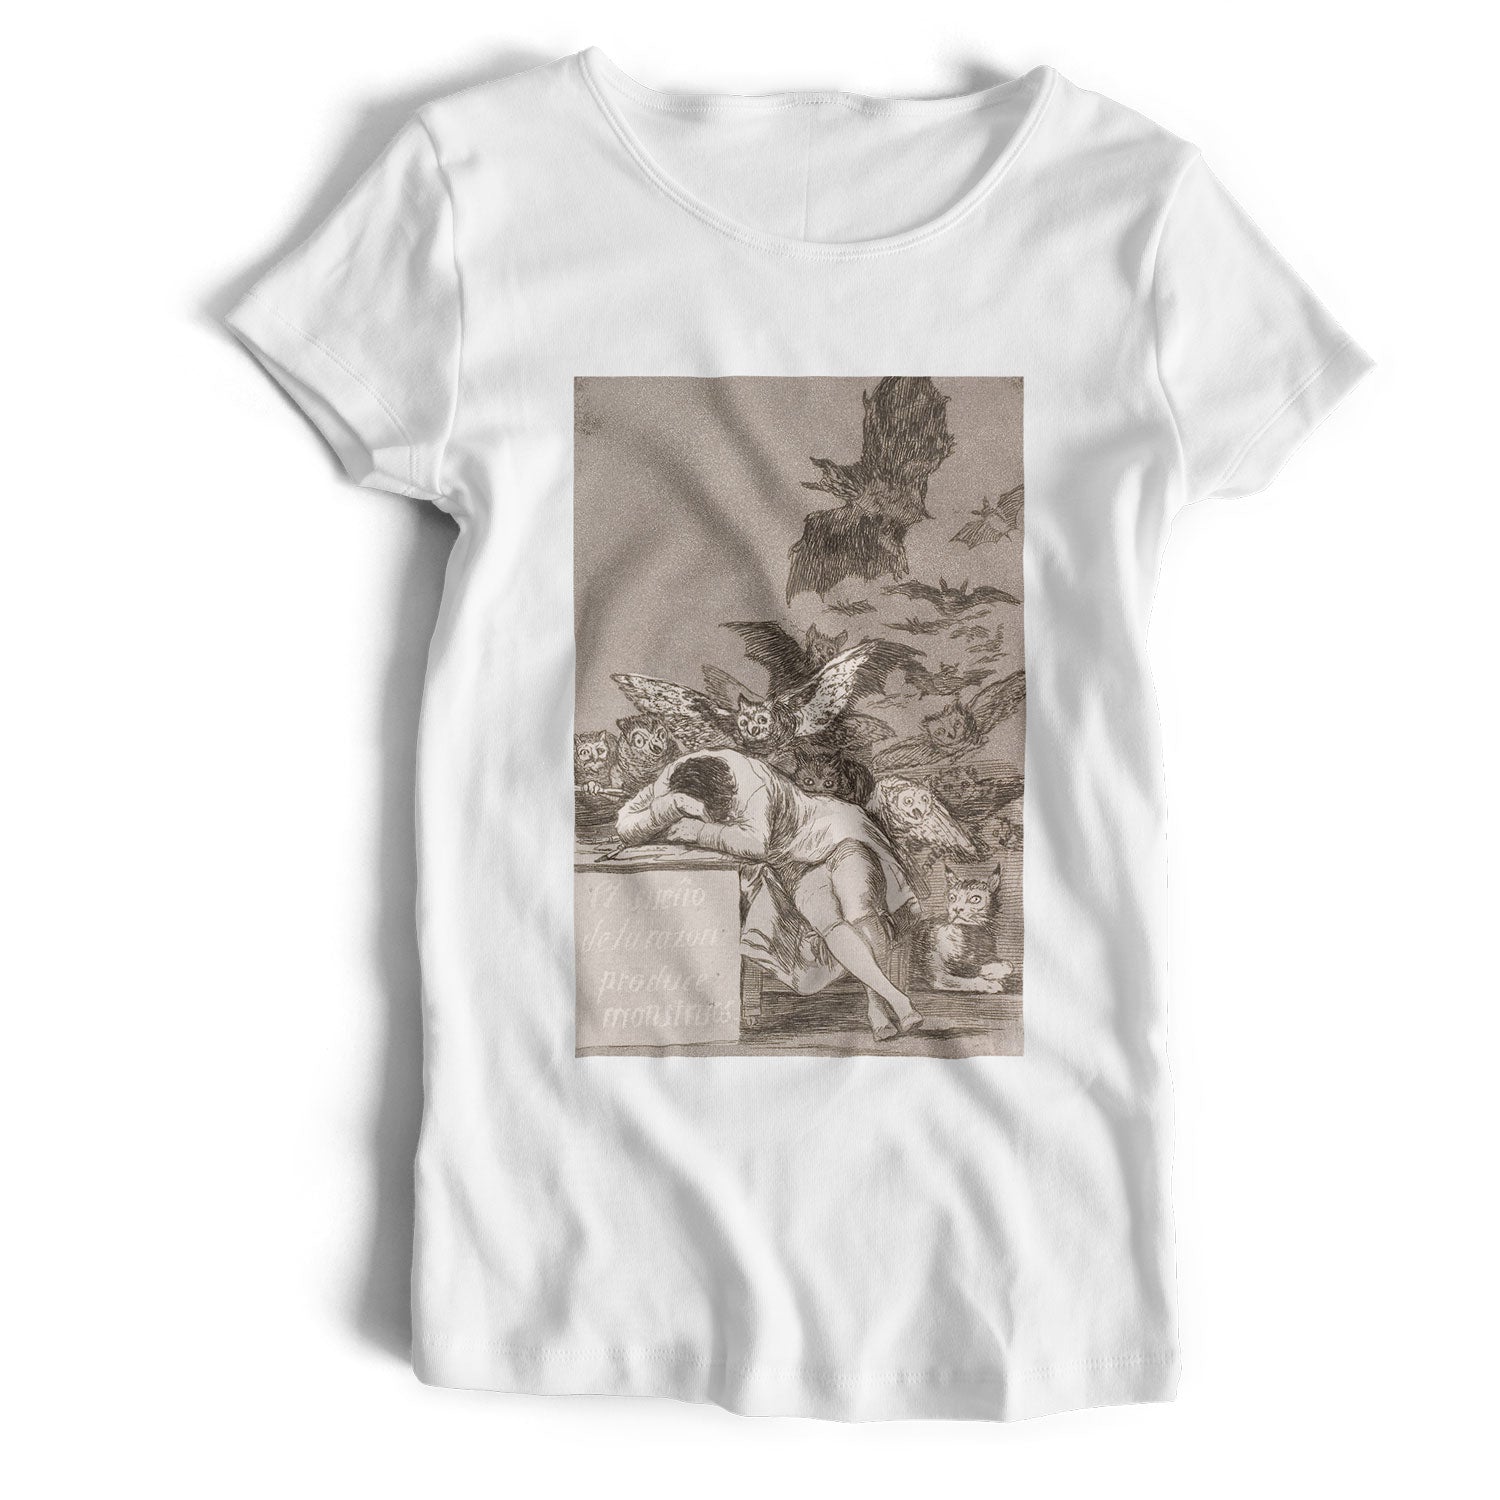 Goya T Shirt - The Sleep Of Reason Produces Monsters An Old Skool Hooligans Fine Art Tee